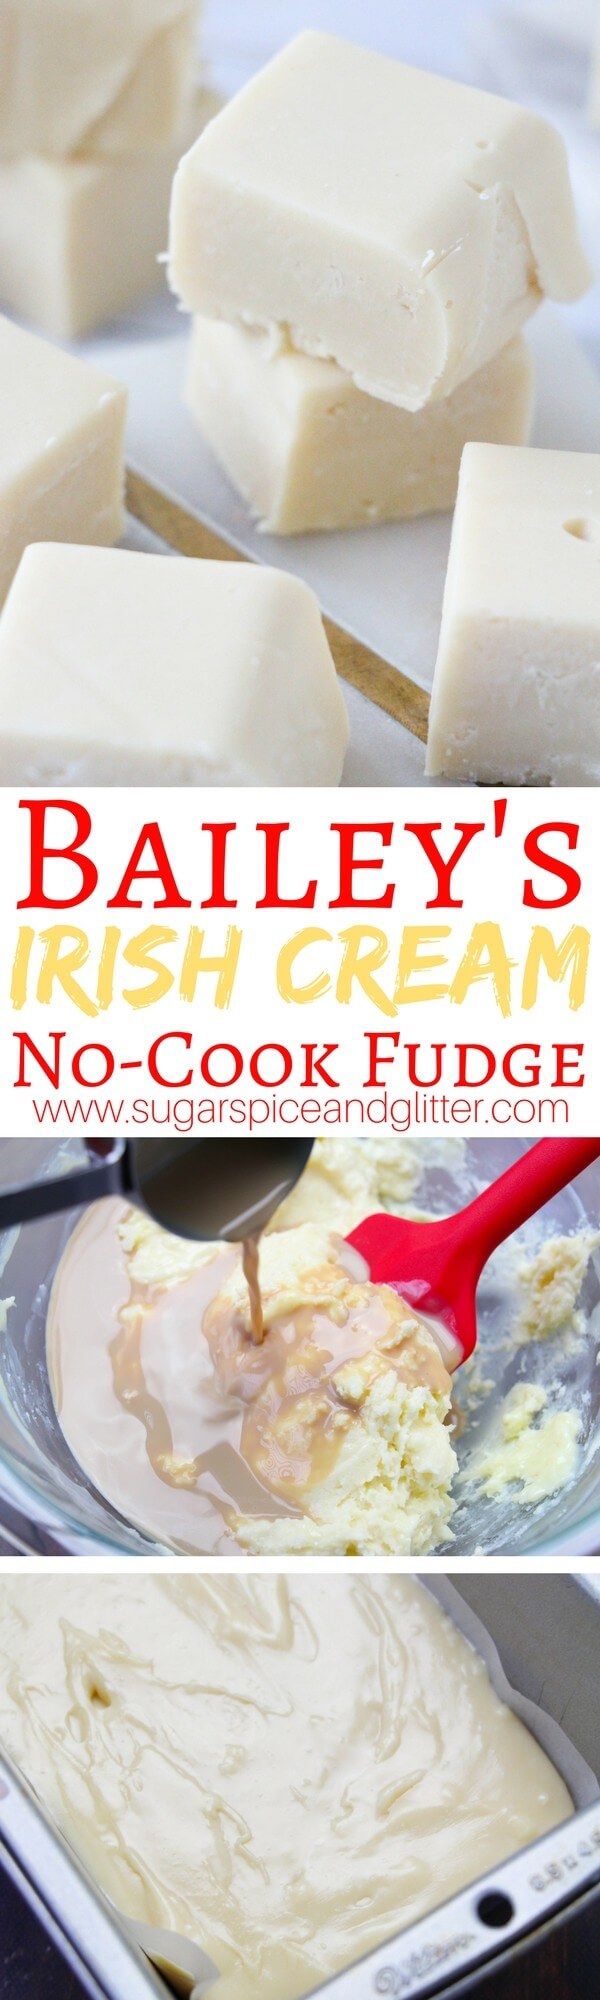 Bailey’s Irish Cream Fudge (with Video)